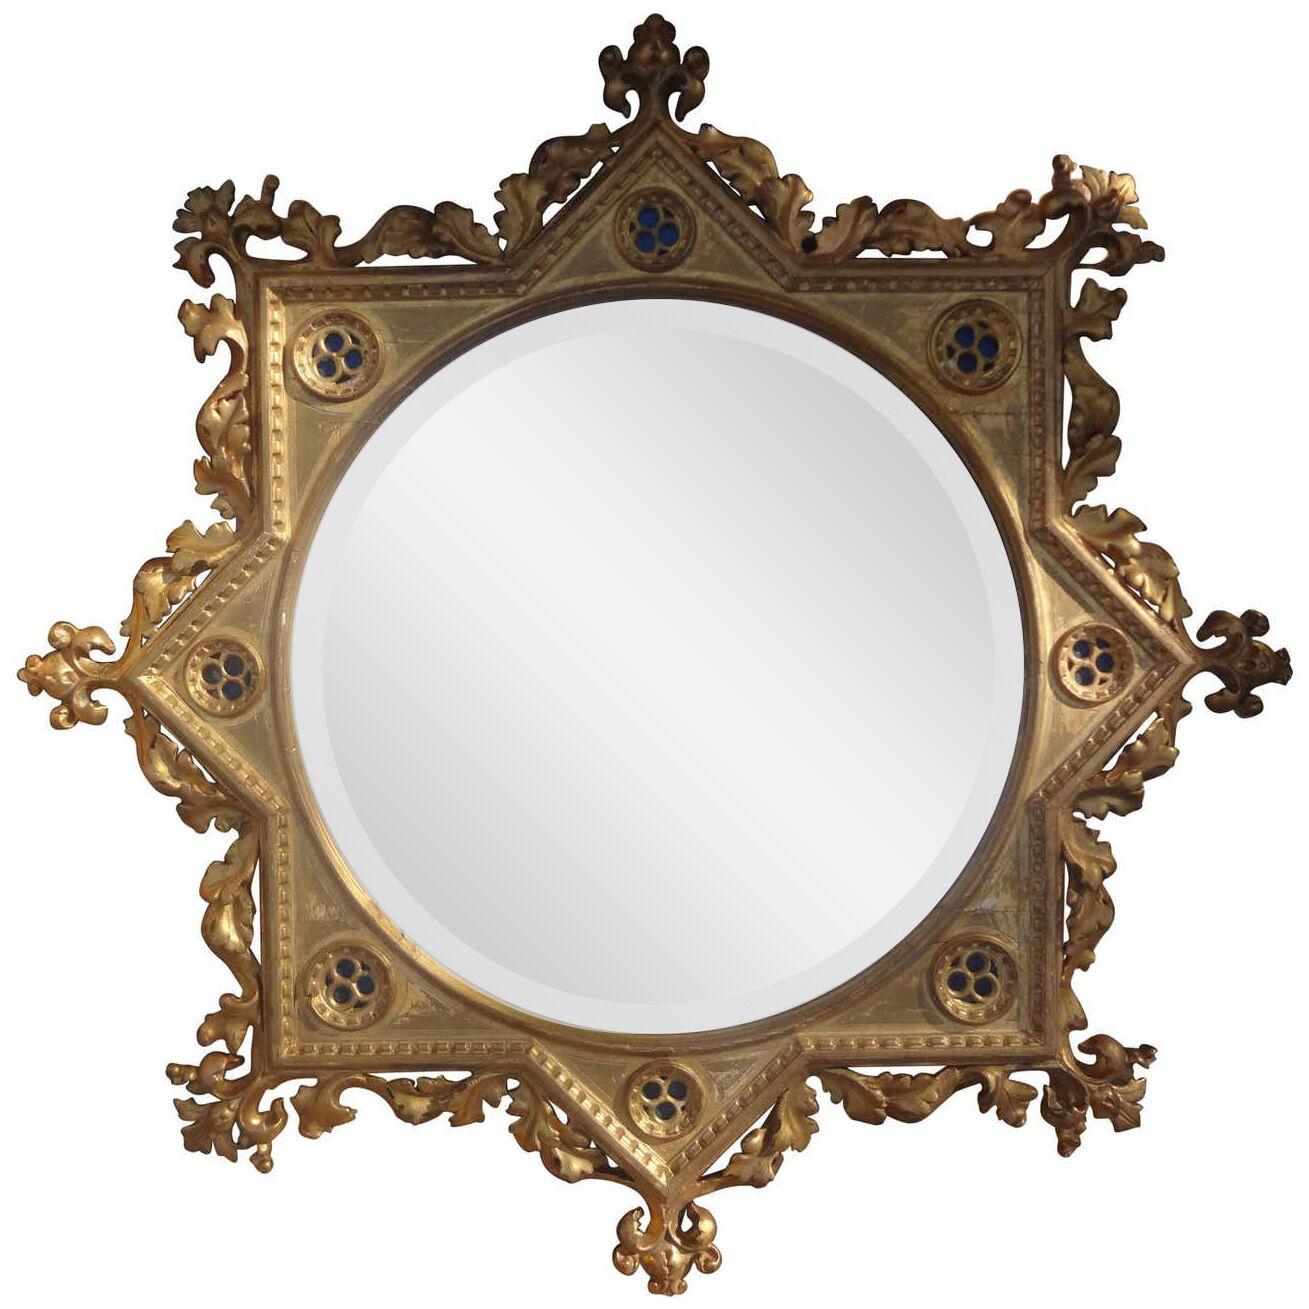 19th Century Italian Giltwood Beveled Mirror